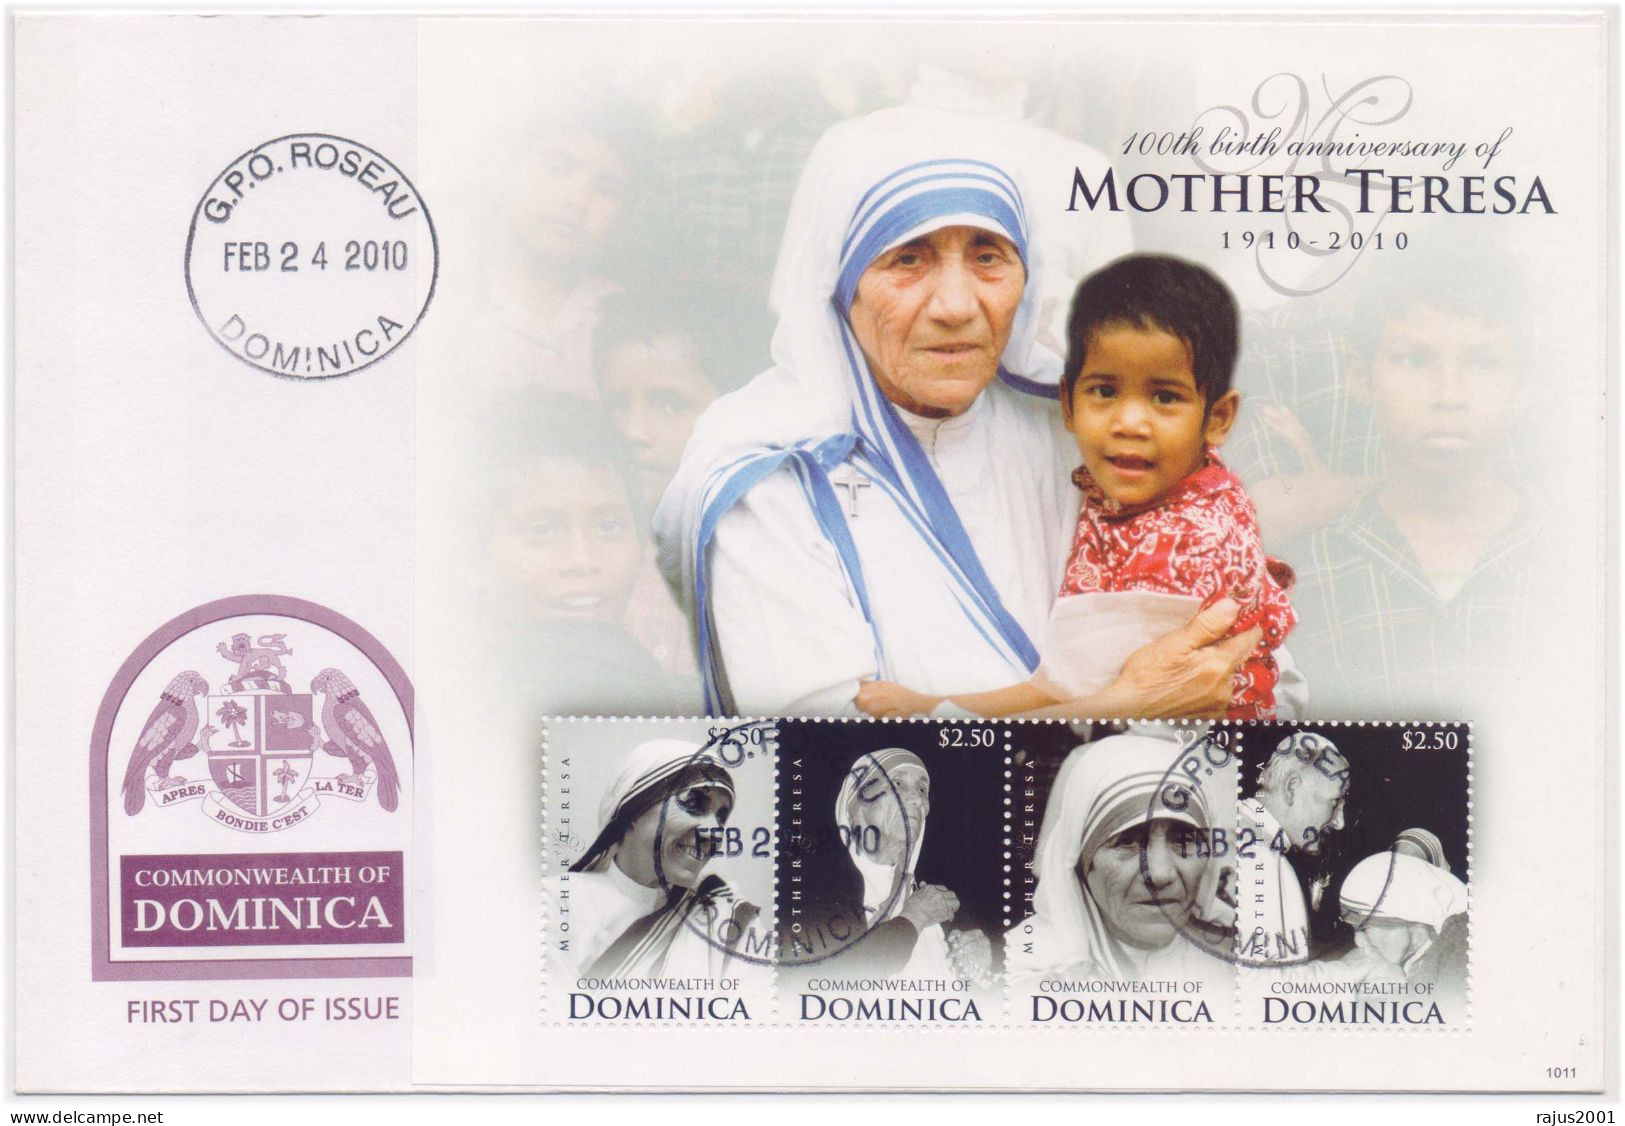 Mother Teresa With Child, Saint, Religion, Peace, Nobel Prize, Famous Women, Dominica Souvenir Sheet FDC - Mother Teresa